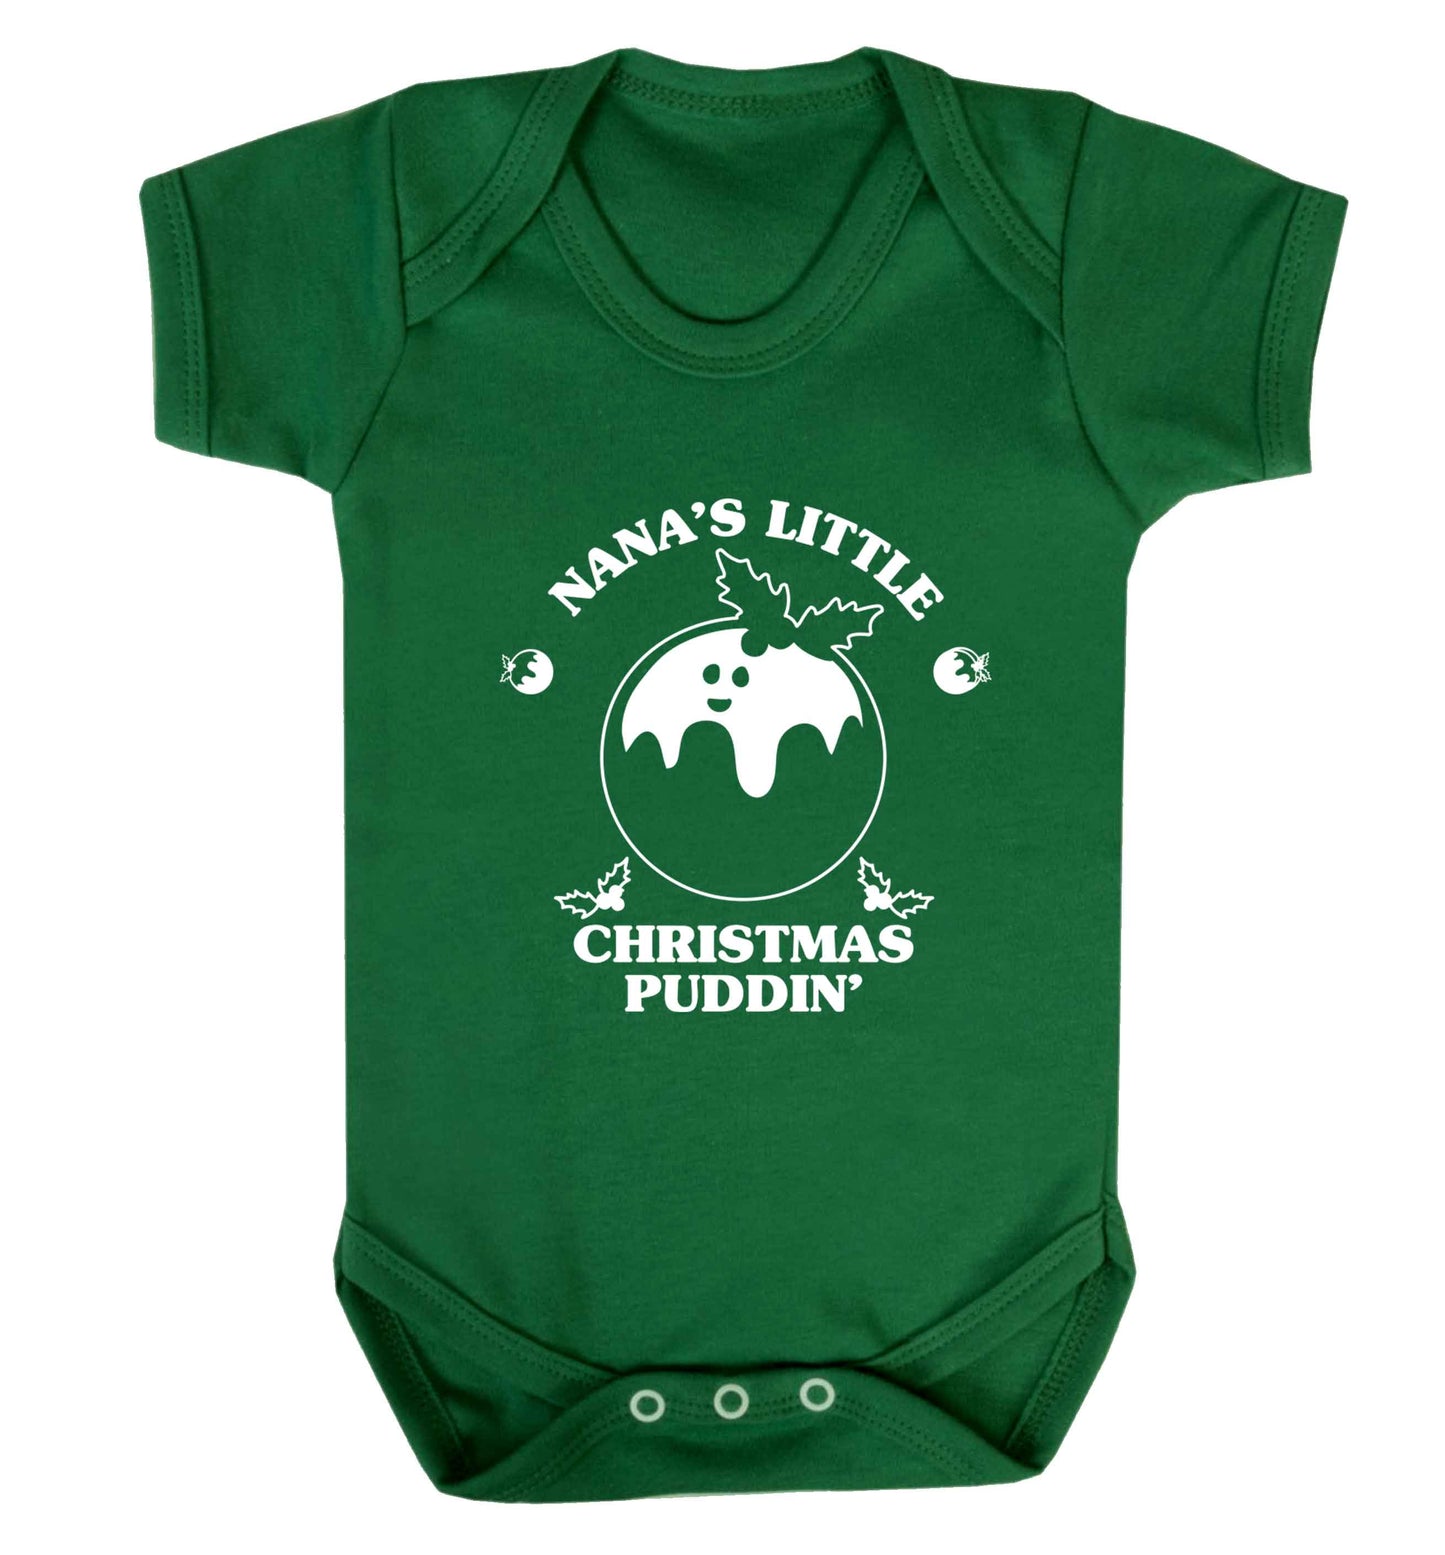 Nana's little Christmas puddin' Baby Vest green 18-24 months